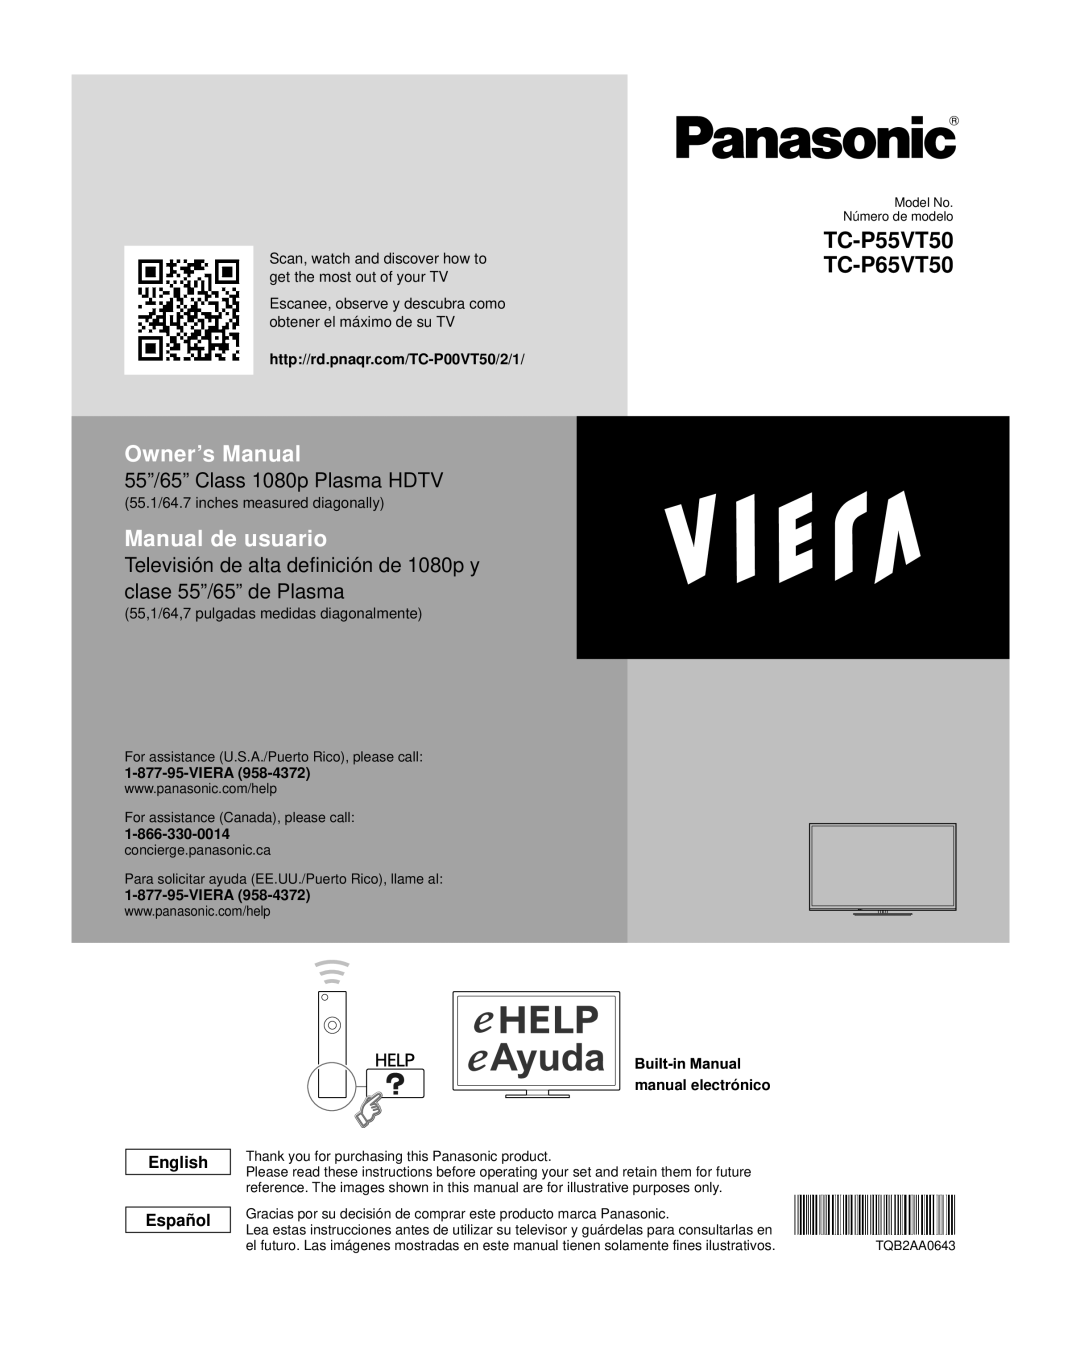 Panasonic TC-P65VT50 owner manual 55”/65” Class 1080p Plasma HDTV, Owner’s Manual, Manual de usuario, English Español 